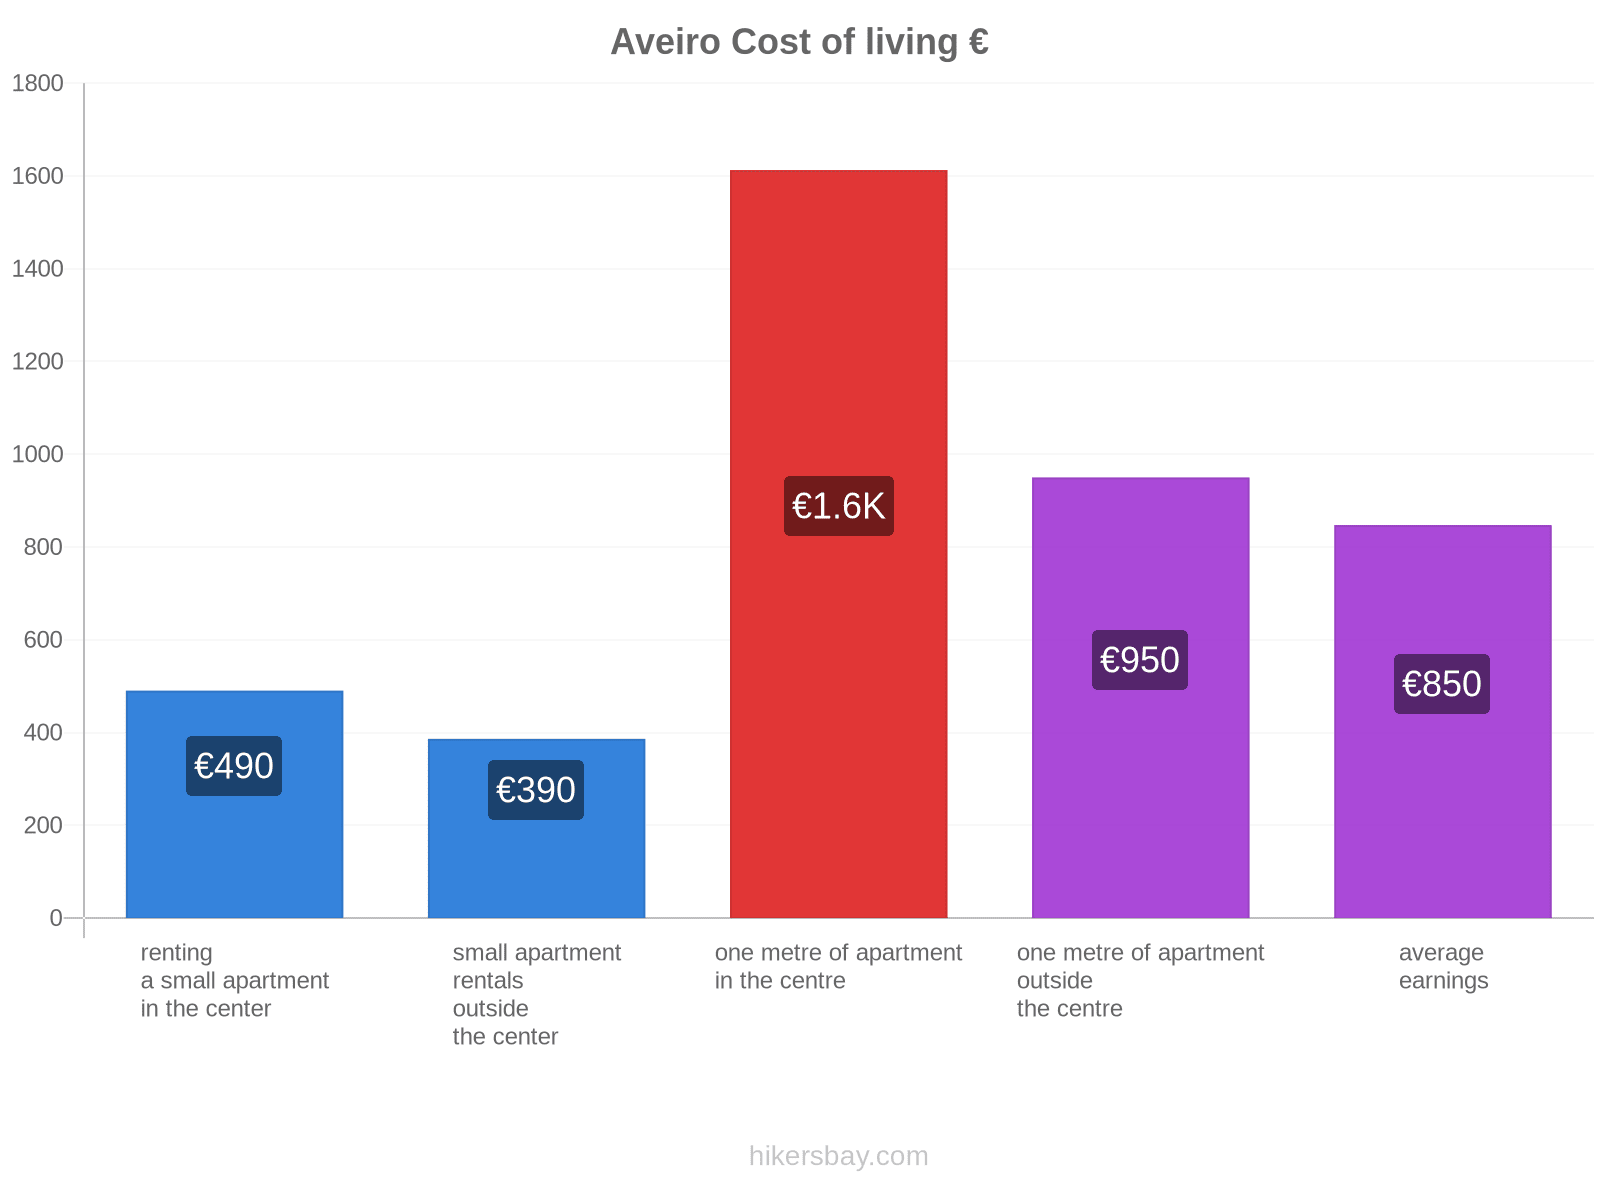 Aveiro cost of living hikersbay.com